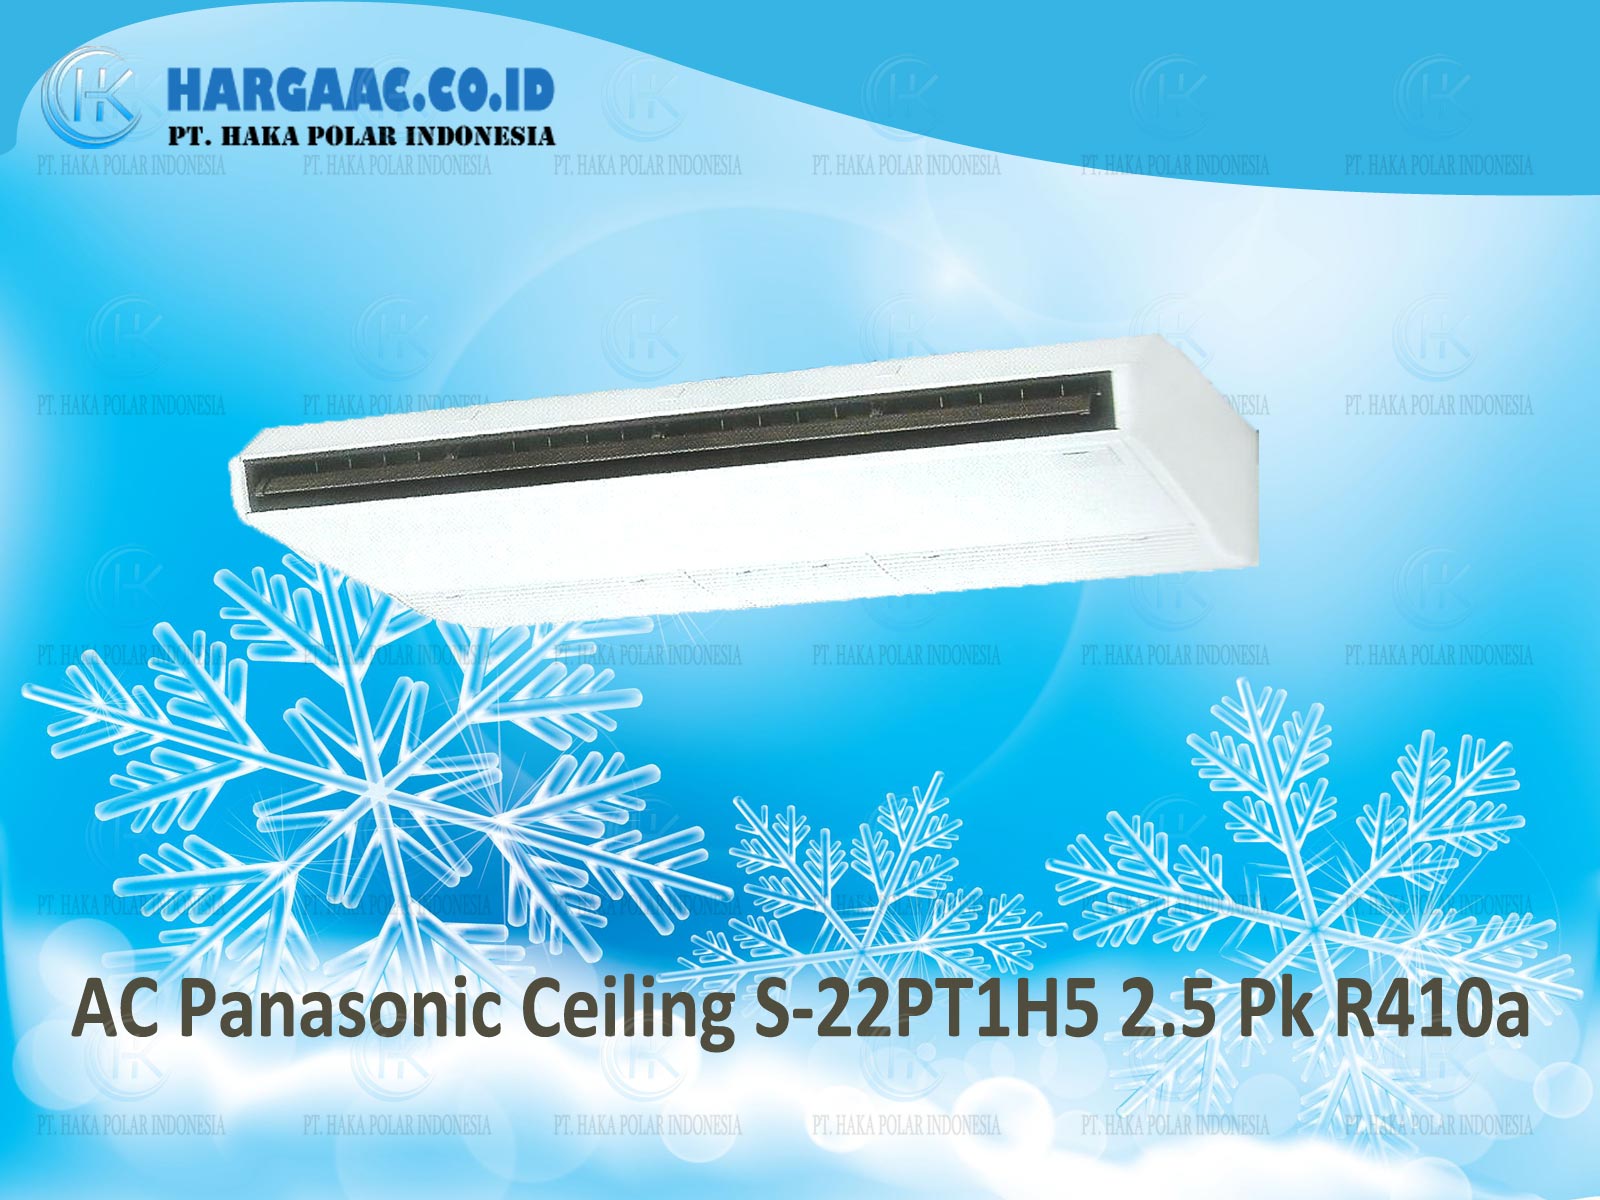 AC Panasonic Ceiling S-22PT1H5 1 Phase 2.5 PK R410a